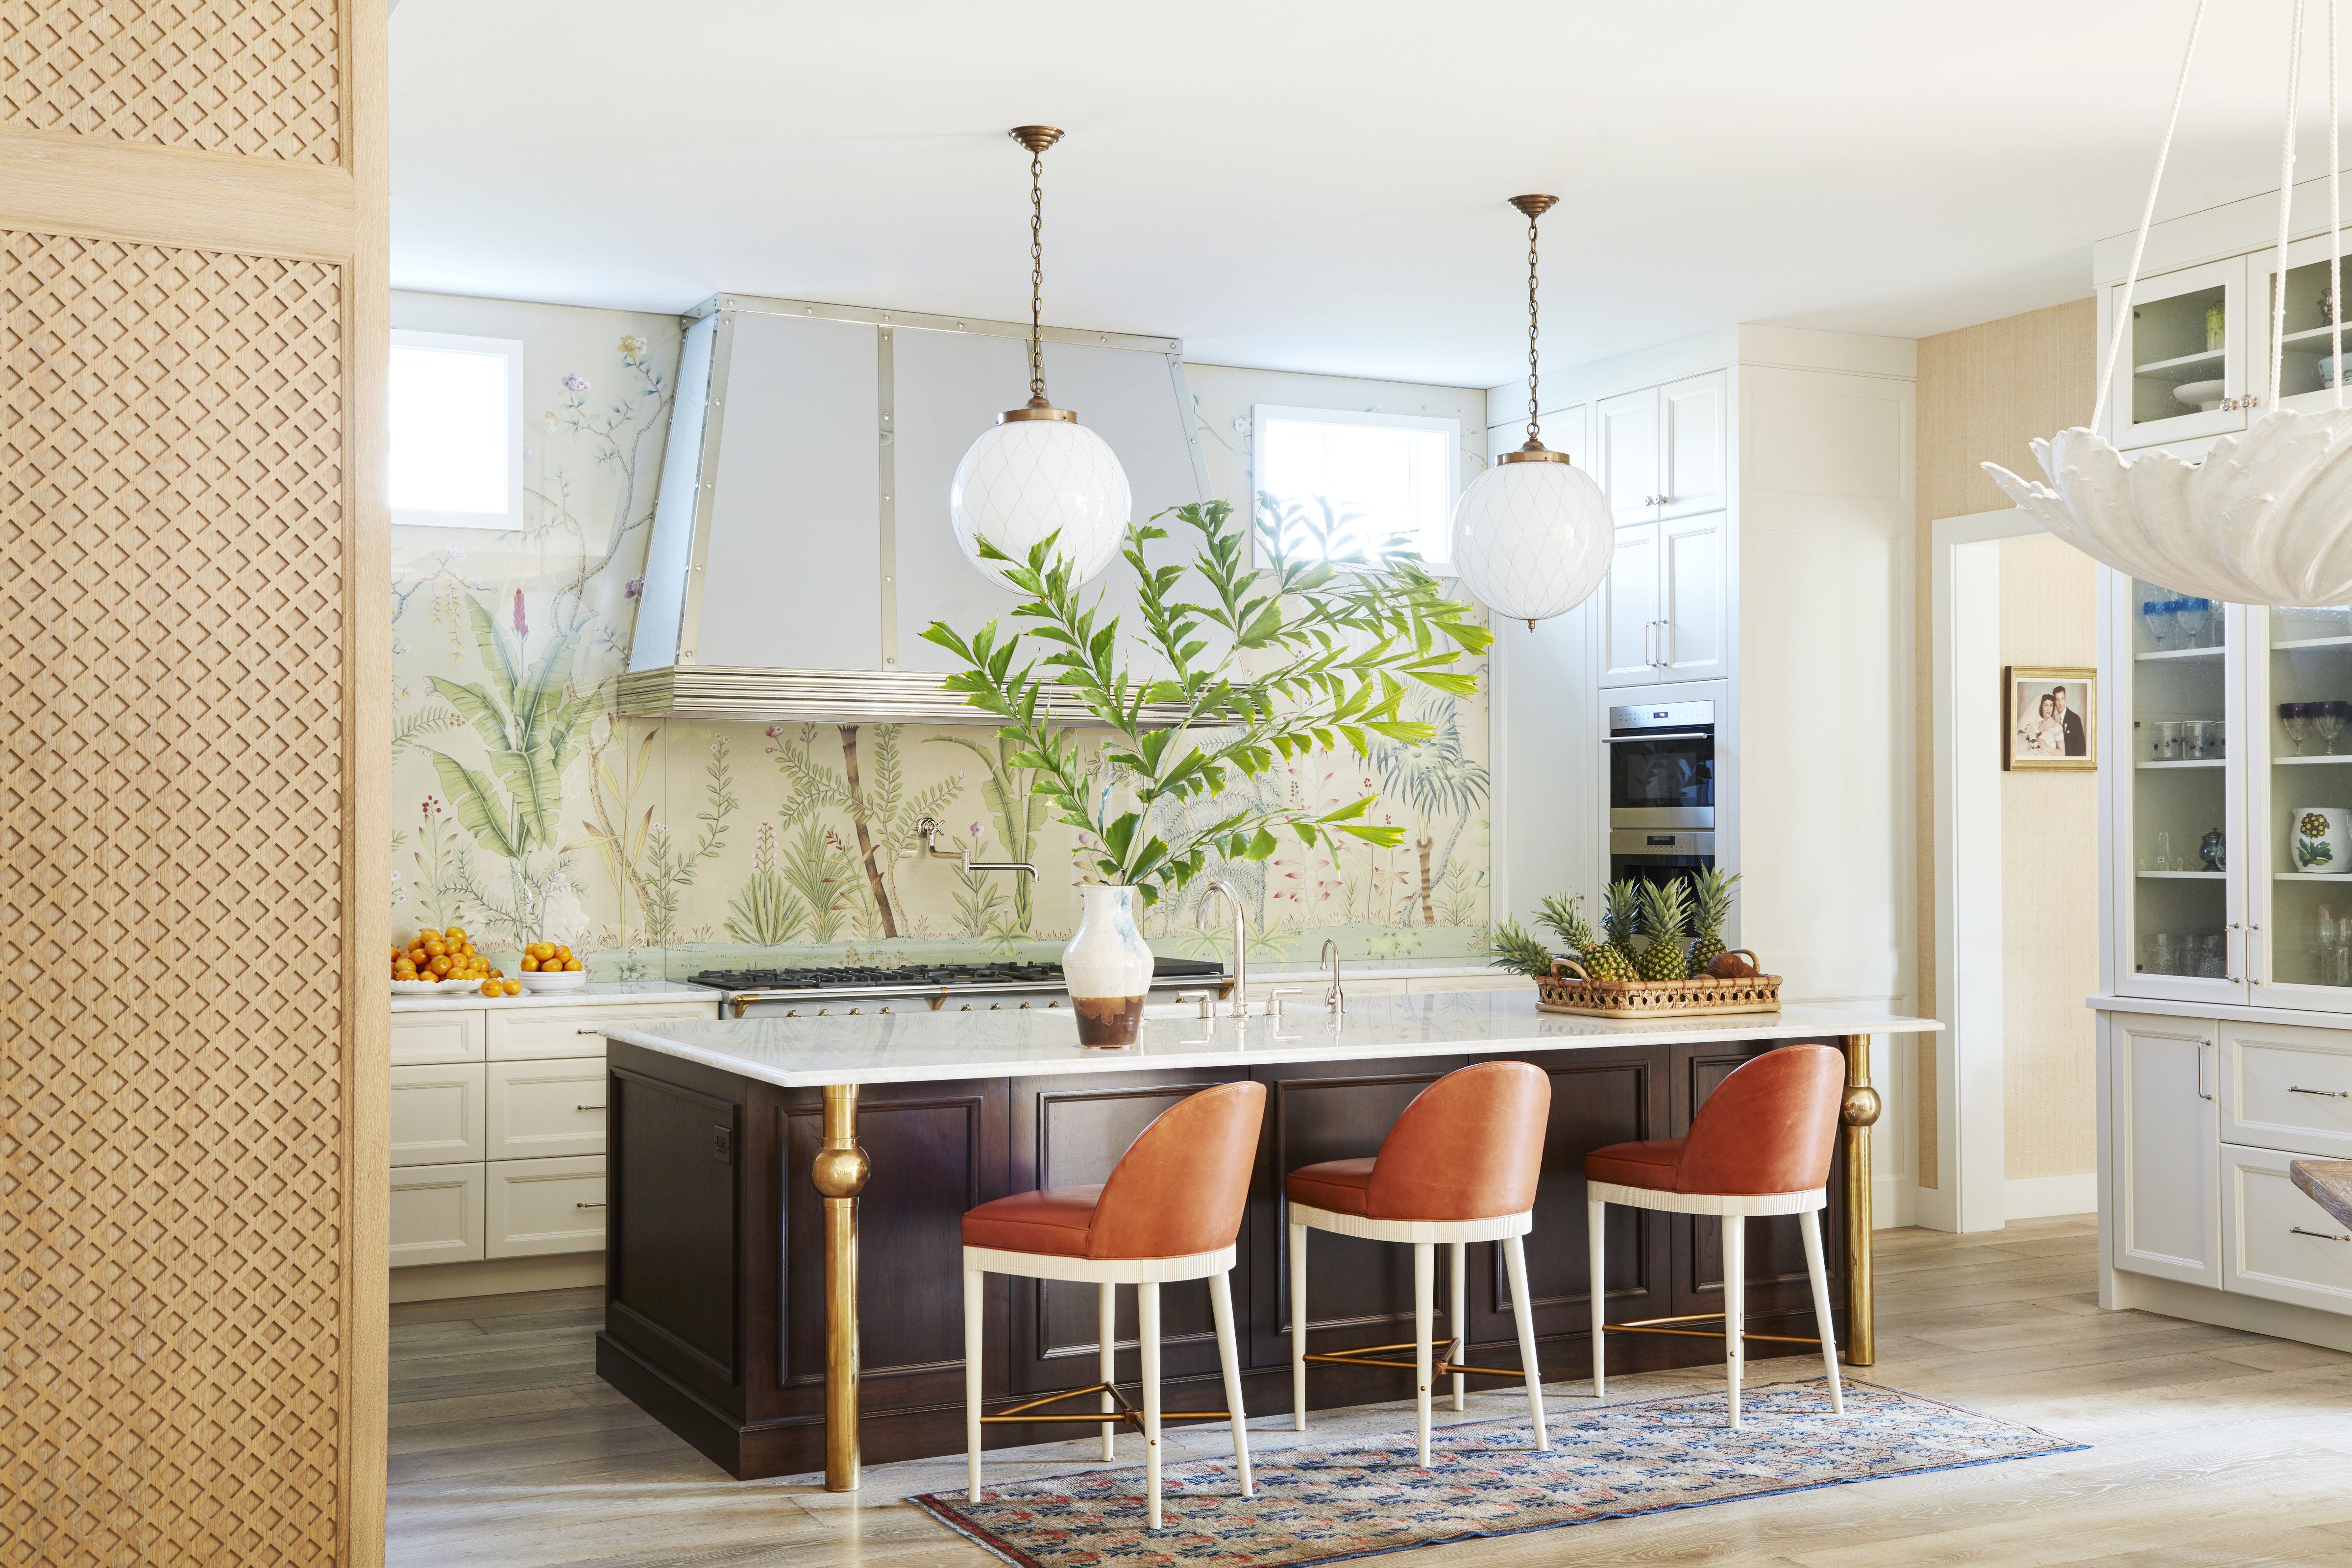 20 Best Kitchen Wall Decor Ideas   Beautiful Kitchen Decorations 20